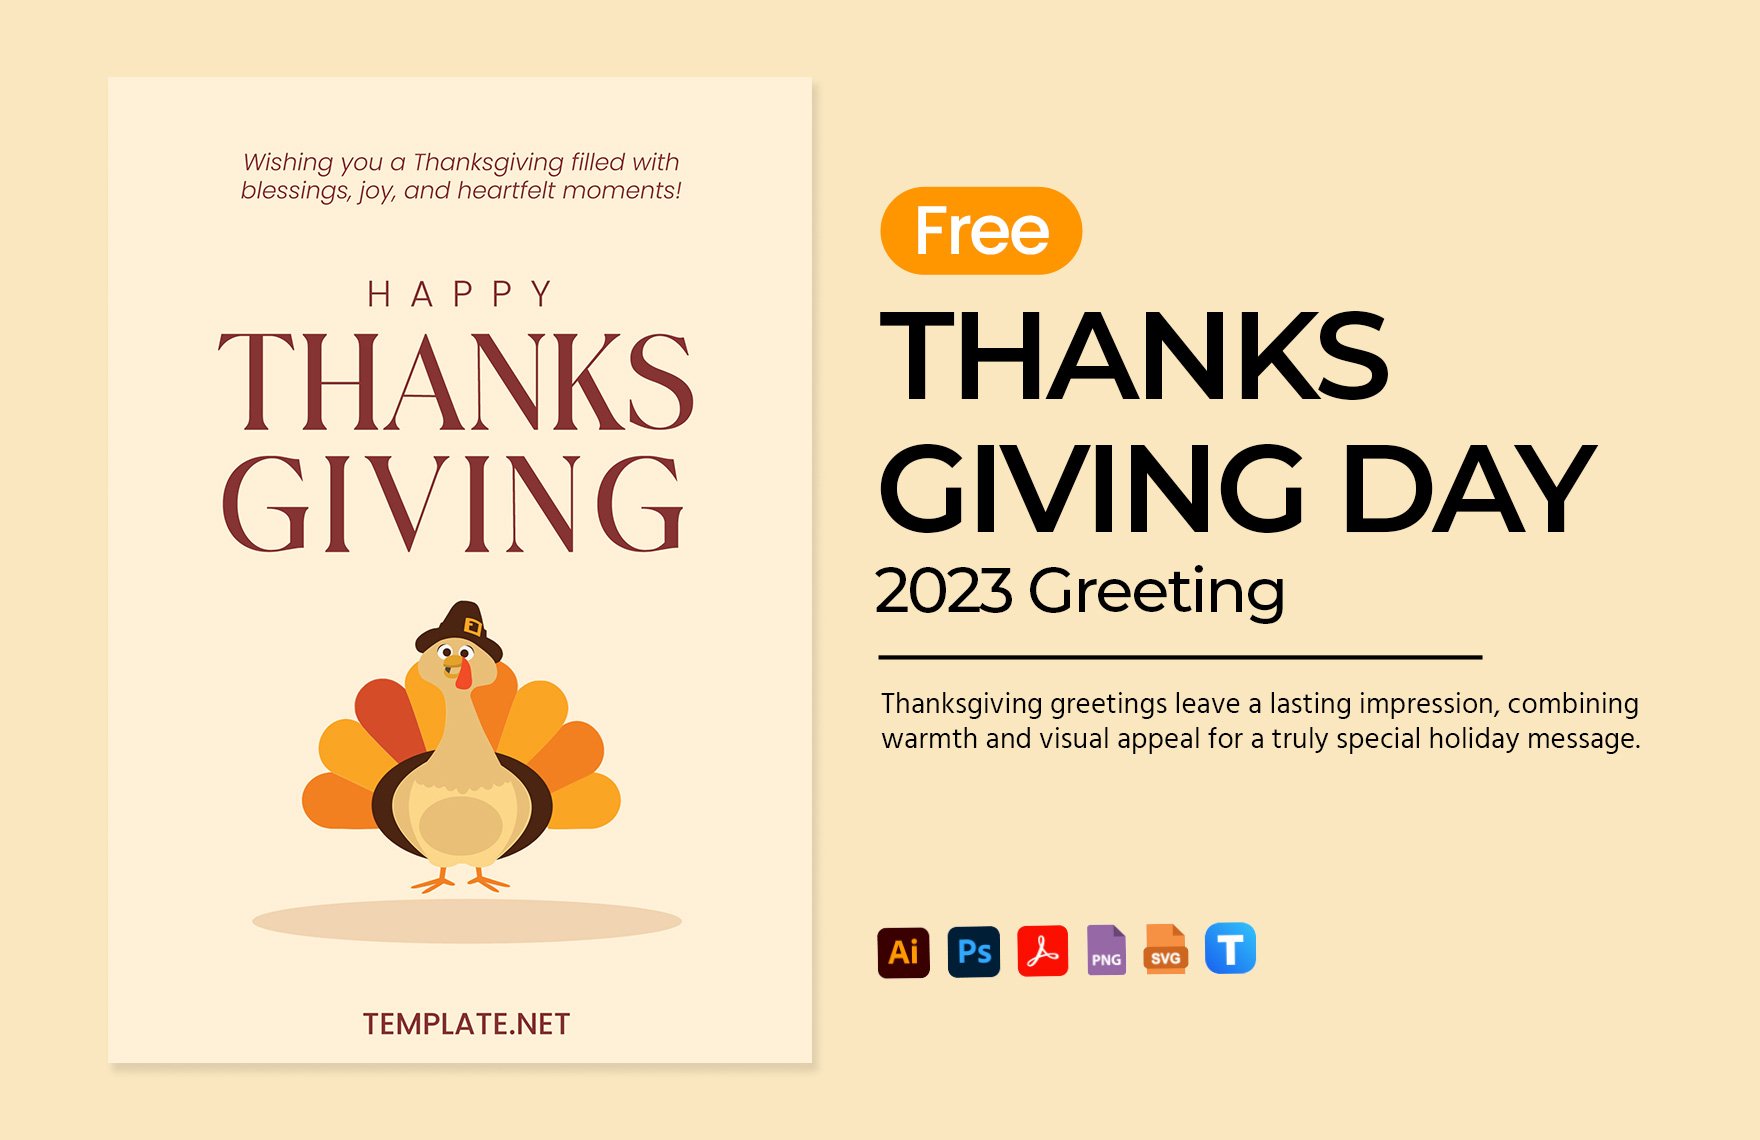 Thanksgiving Day 2023 Greeting in PDF, Illustrator, PSD, SVG, PNG